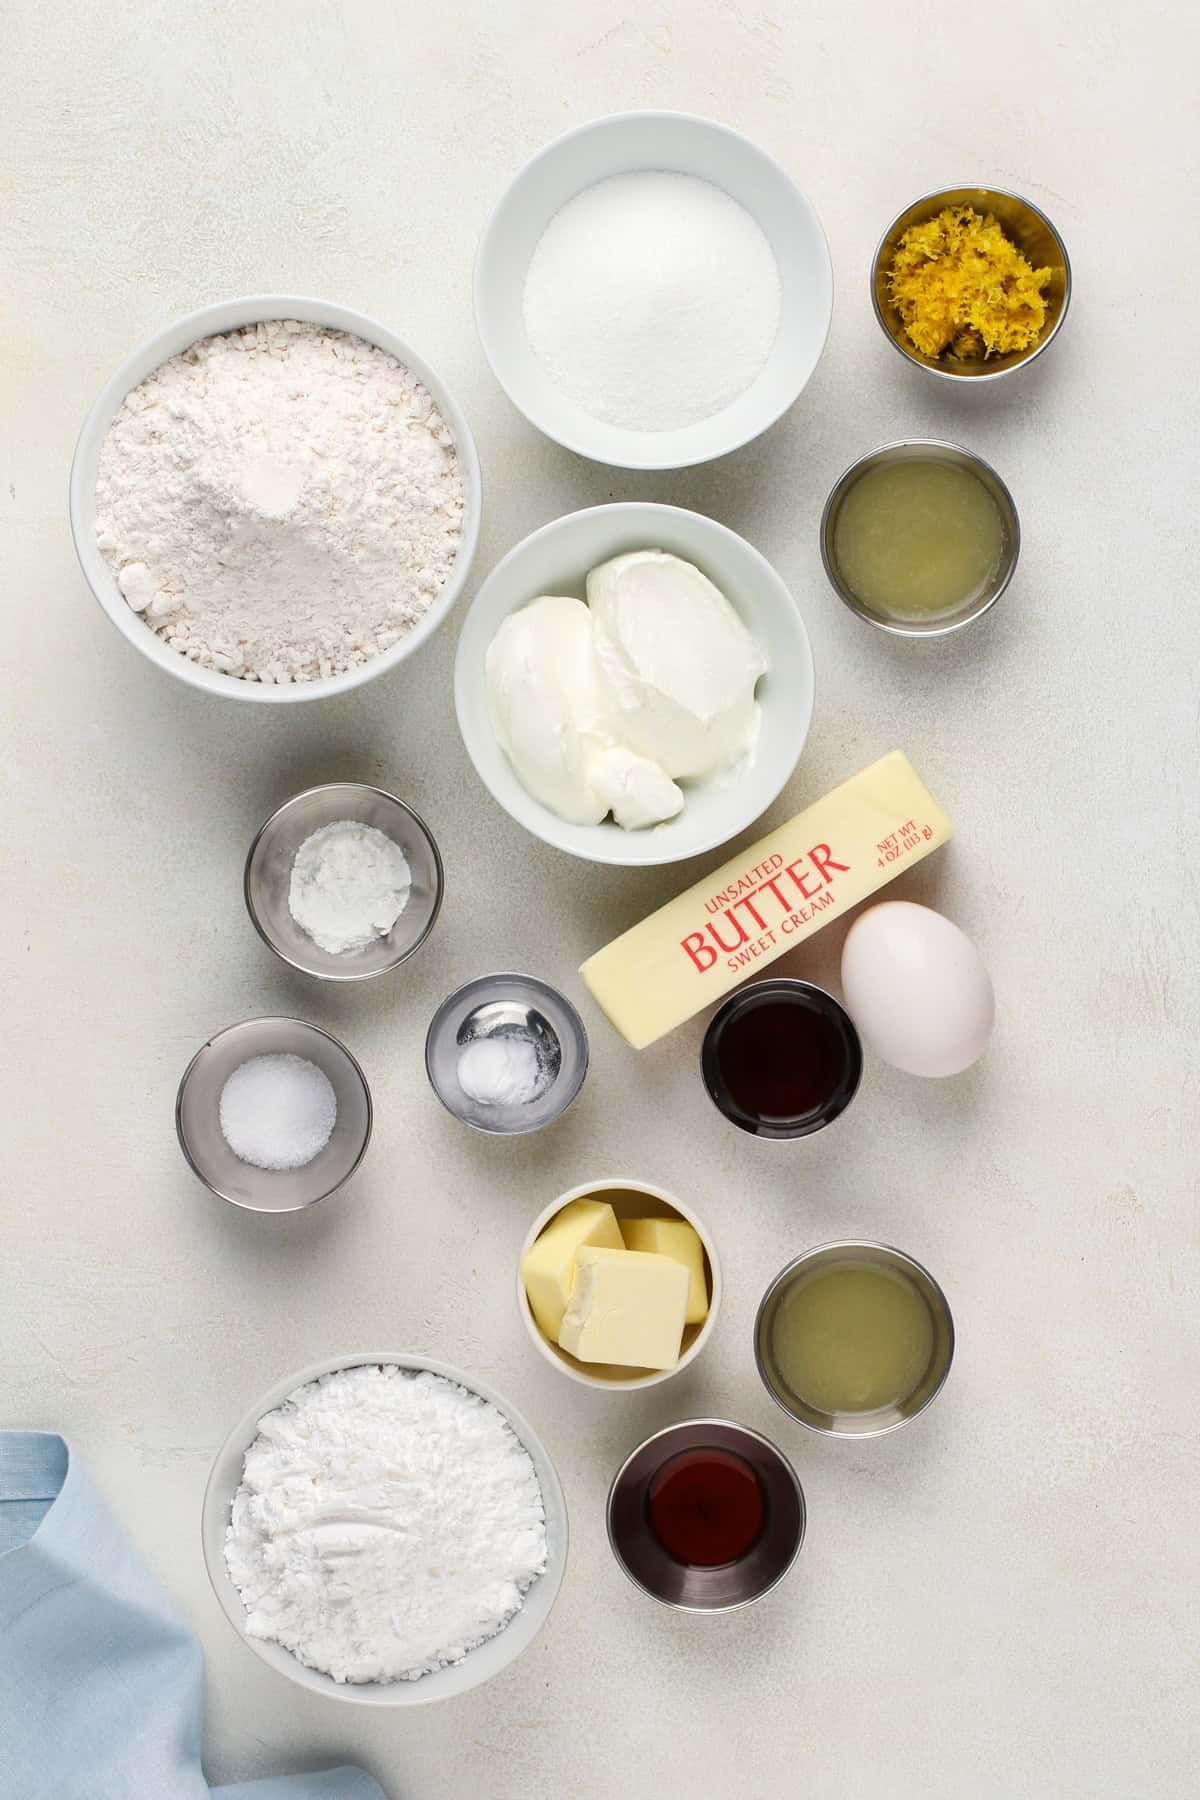 Ingredients for glazed lemon scones arranged on a countertop.